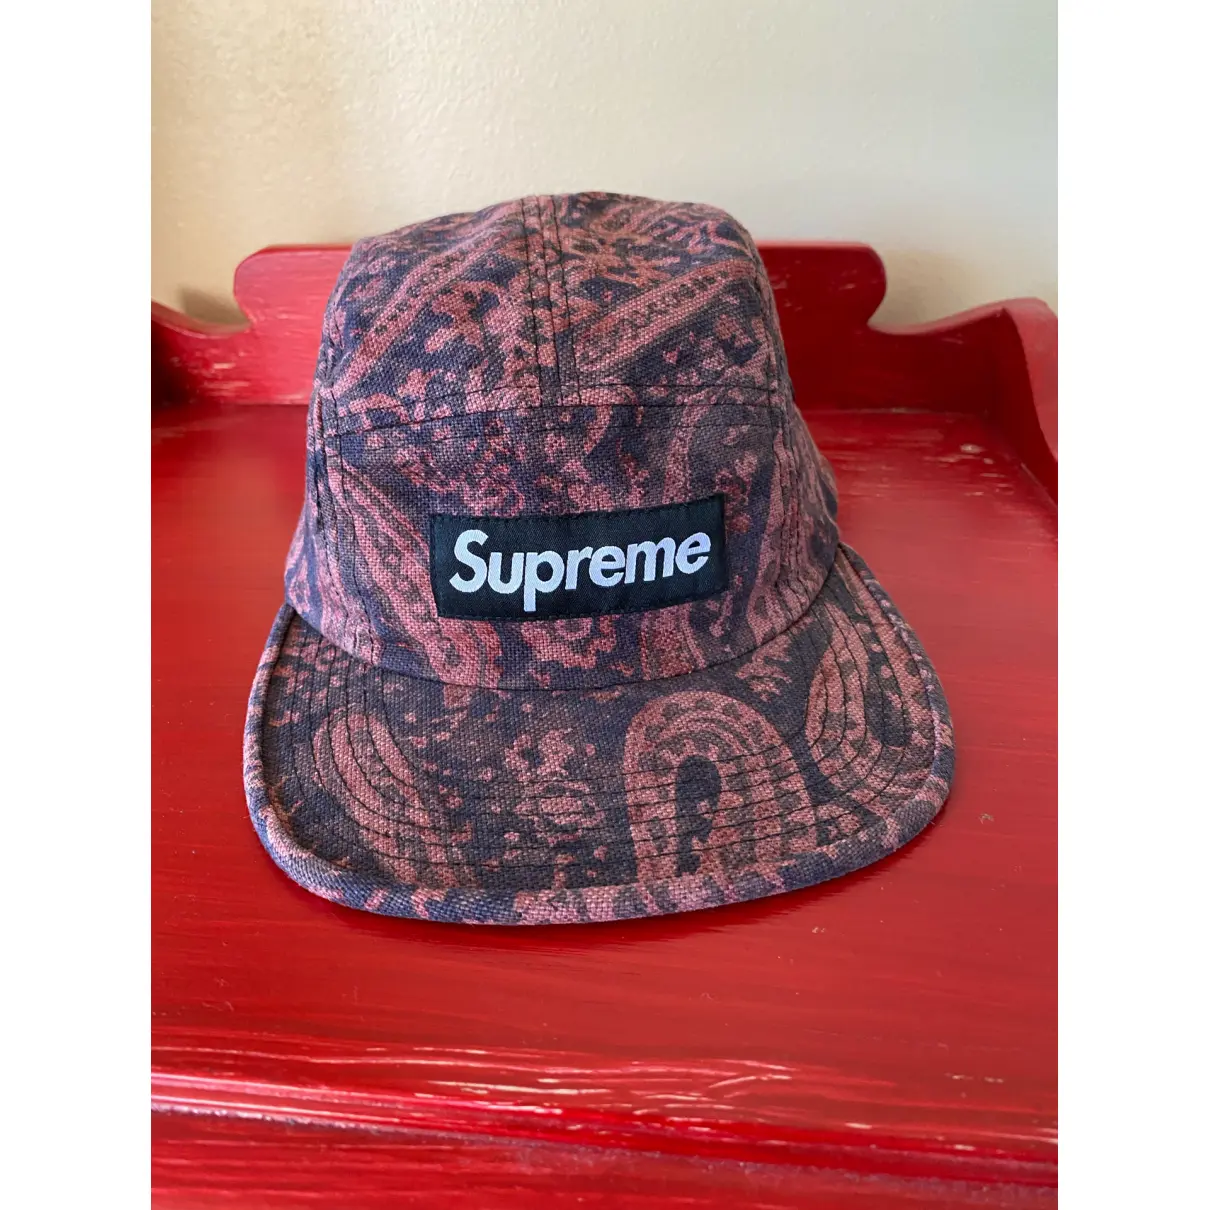 Buy Supreme Box Logo cloth hat online